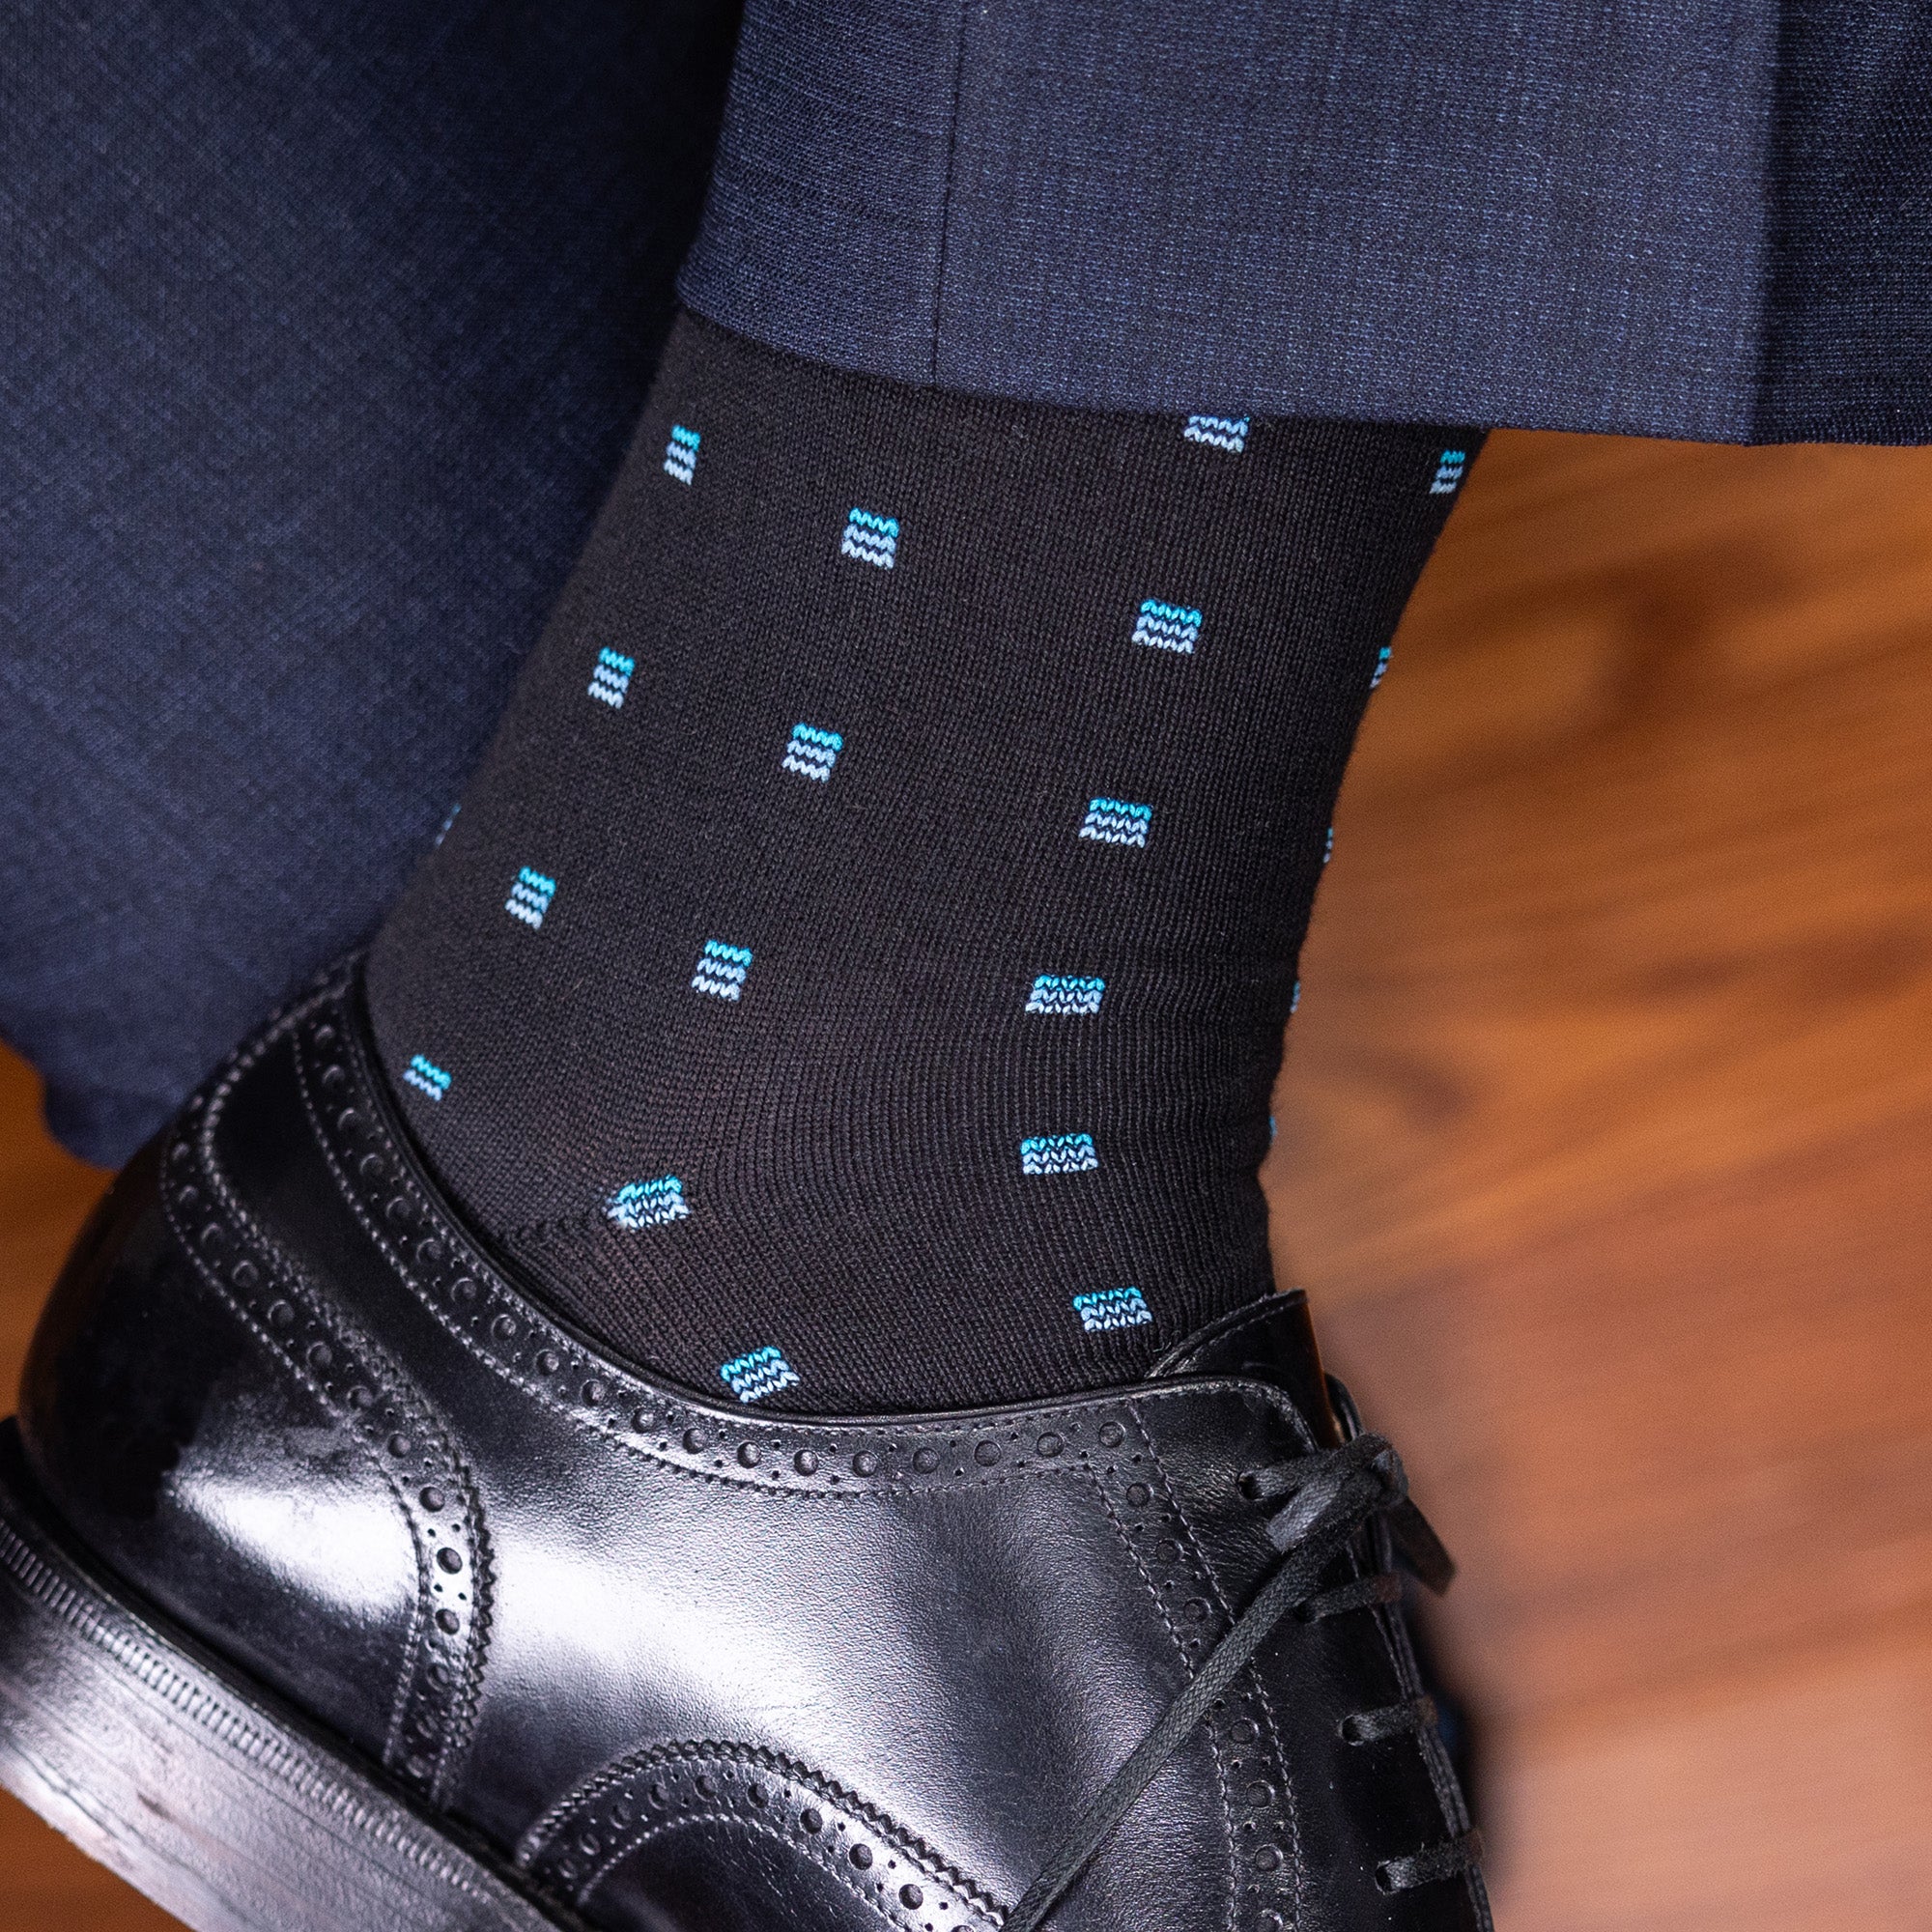 man crossing legs showing black and blue patterned dress socks